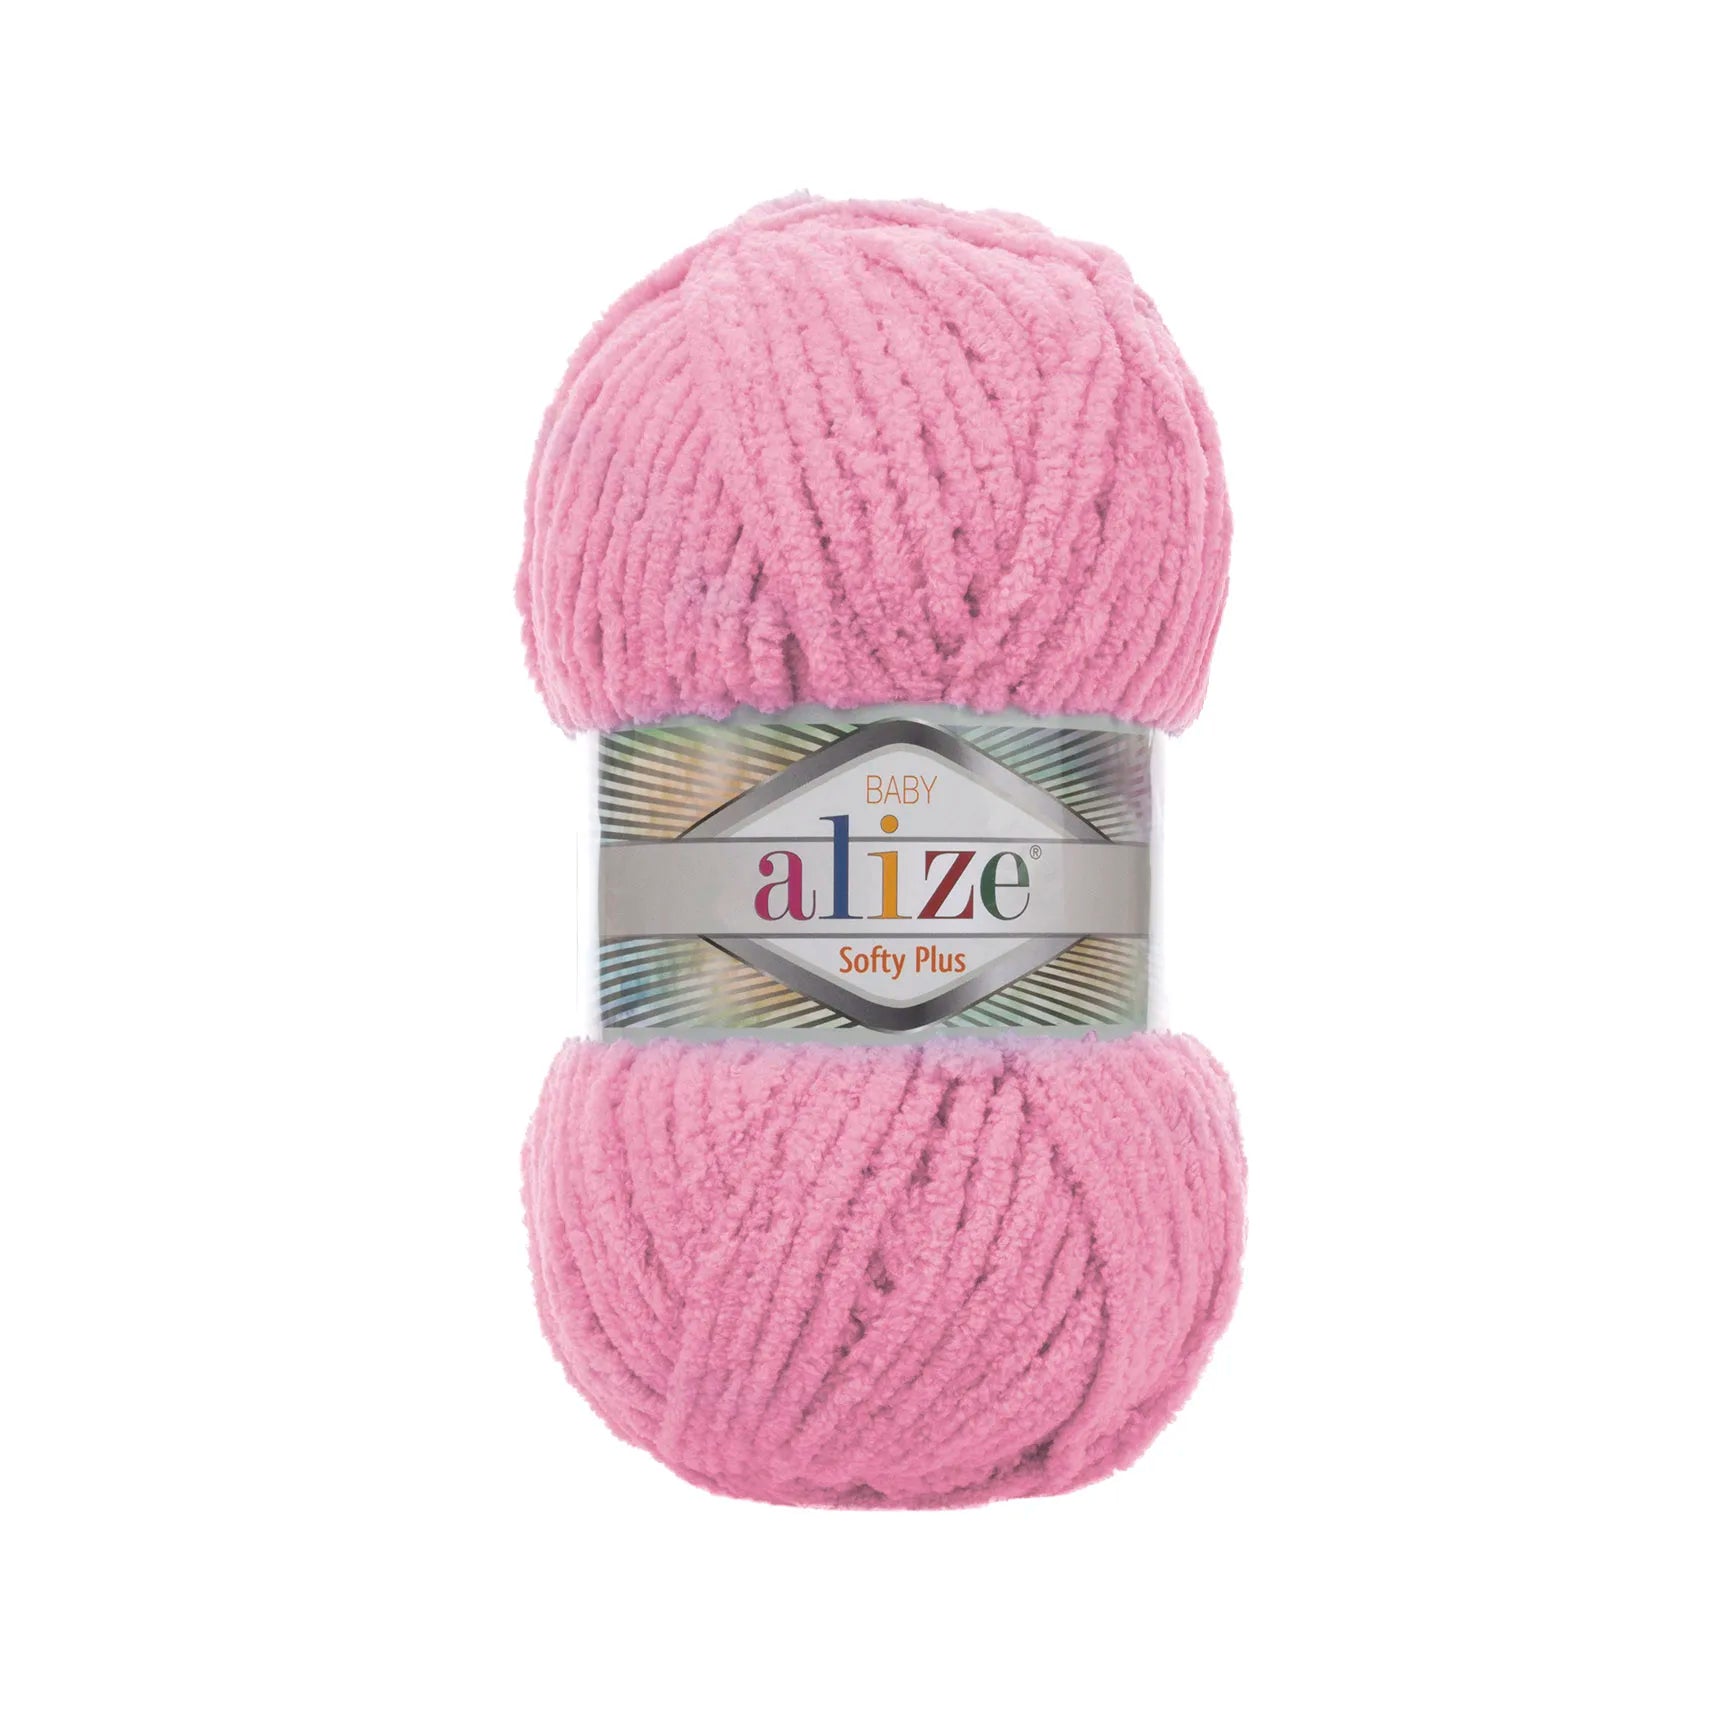 Alize Softy Plus Yarn Hobby Shopy Turkish Store Shop Hand Knitting Yarn 185